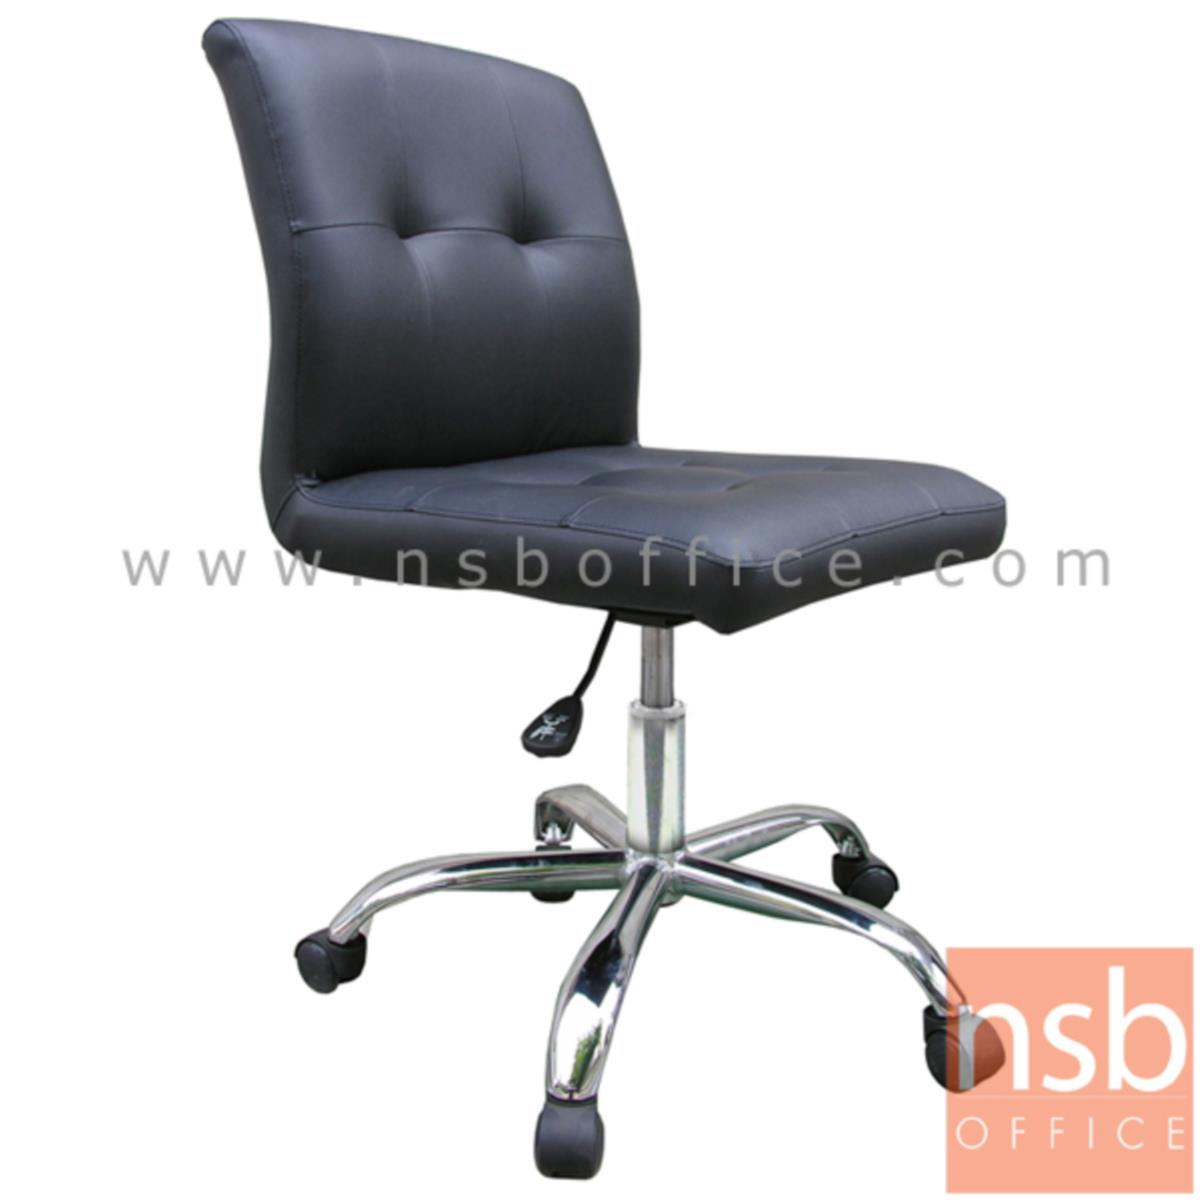 B03A432:เก้าอี้สำนักงาน รุ่น Peabo (พีโบ)  ระบบ Gas Lifthing ขาเหล็กชุบโครเมี่ยม